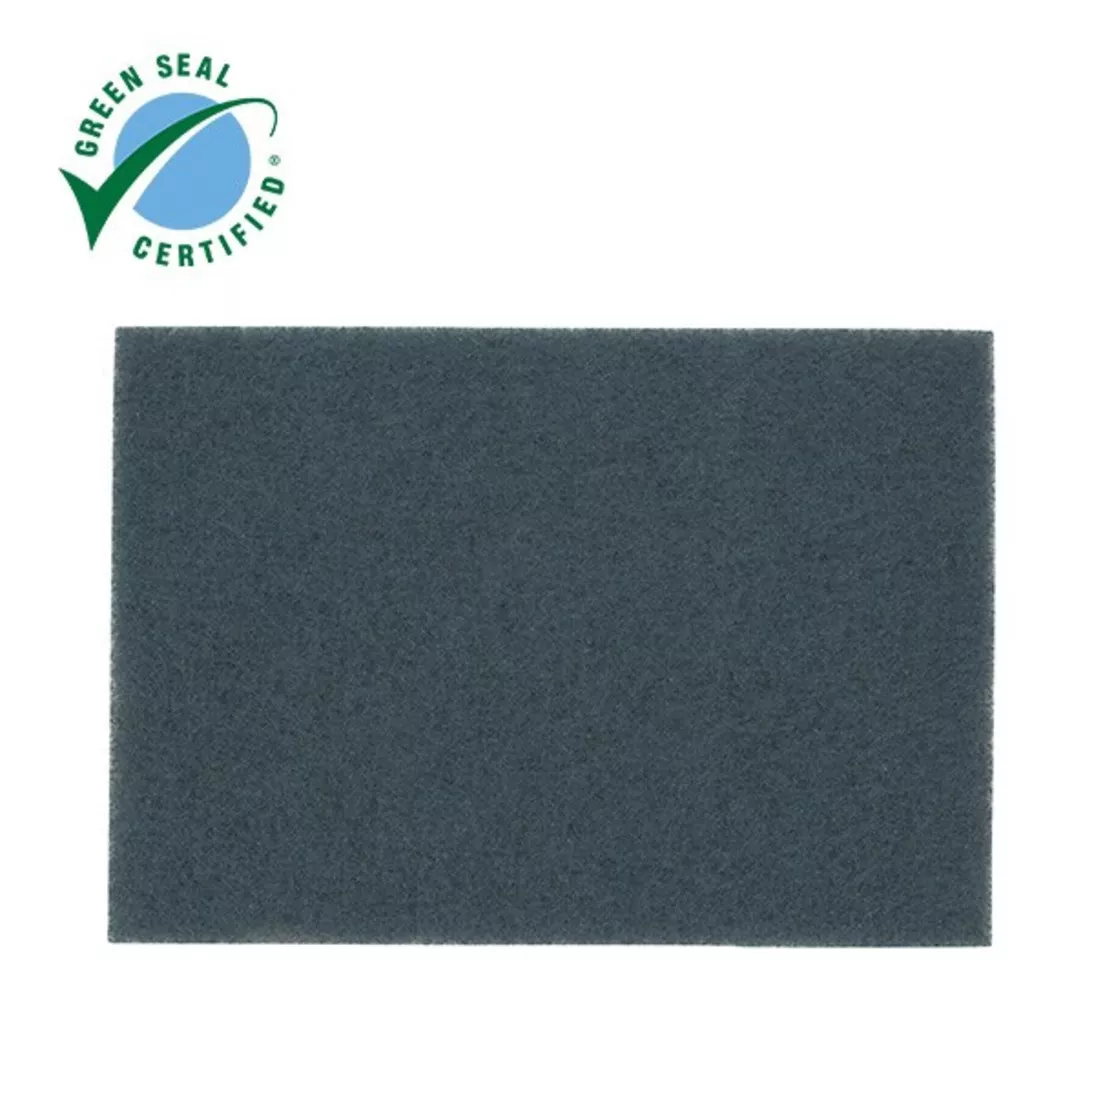 3M™ Blue Cleaner Pad 5300, 28 in x 14 in, 10/Case